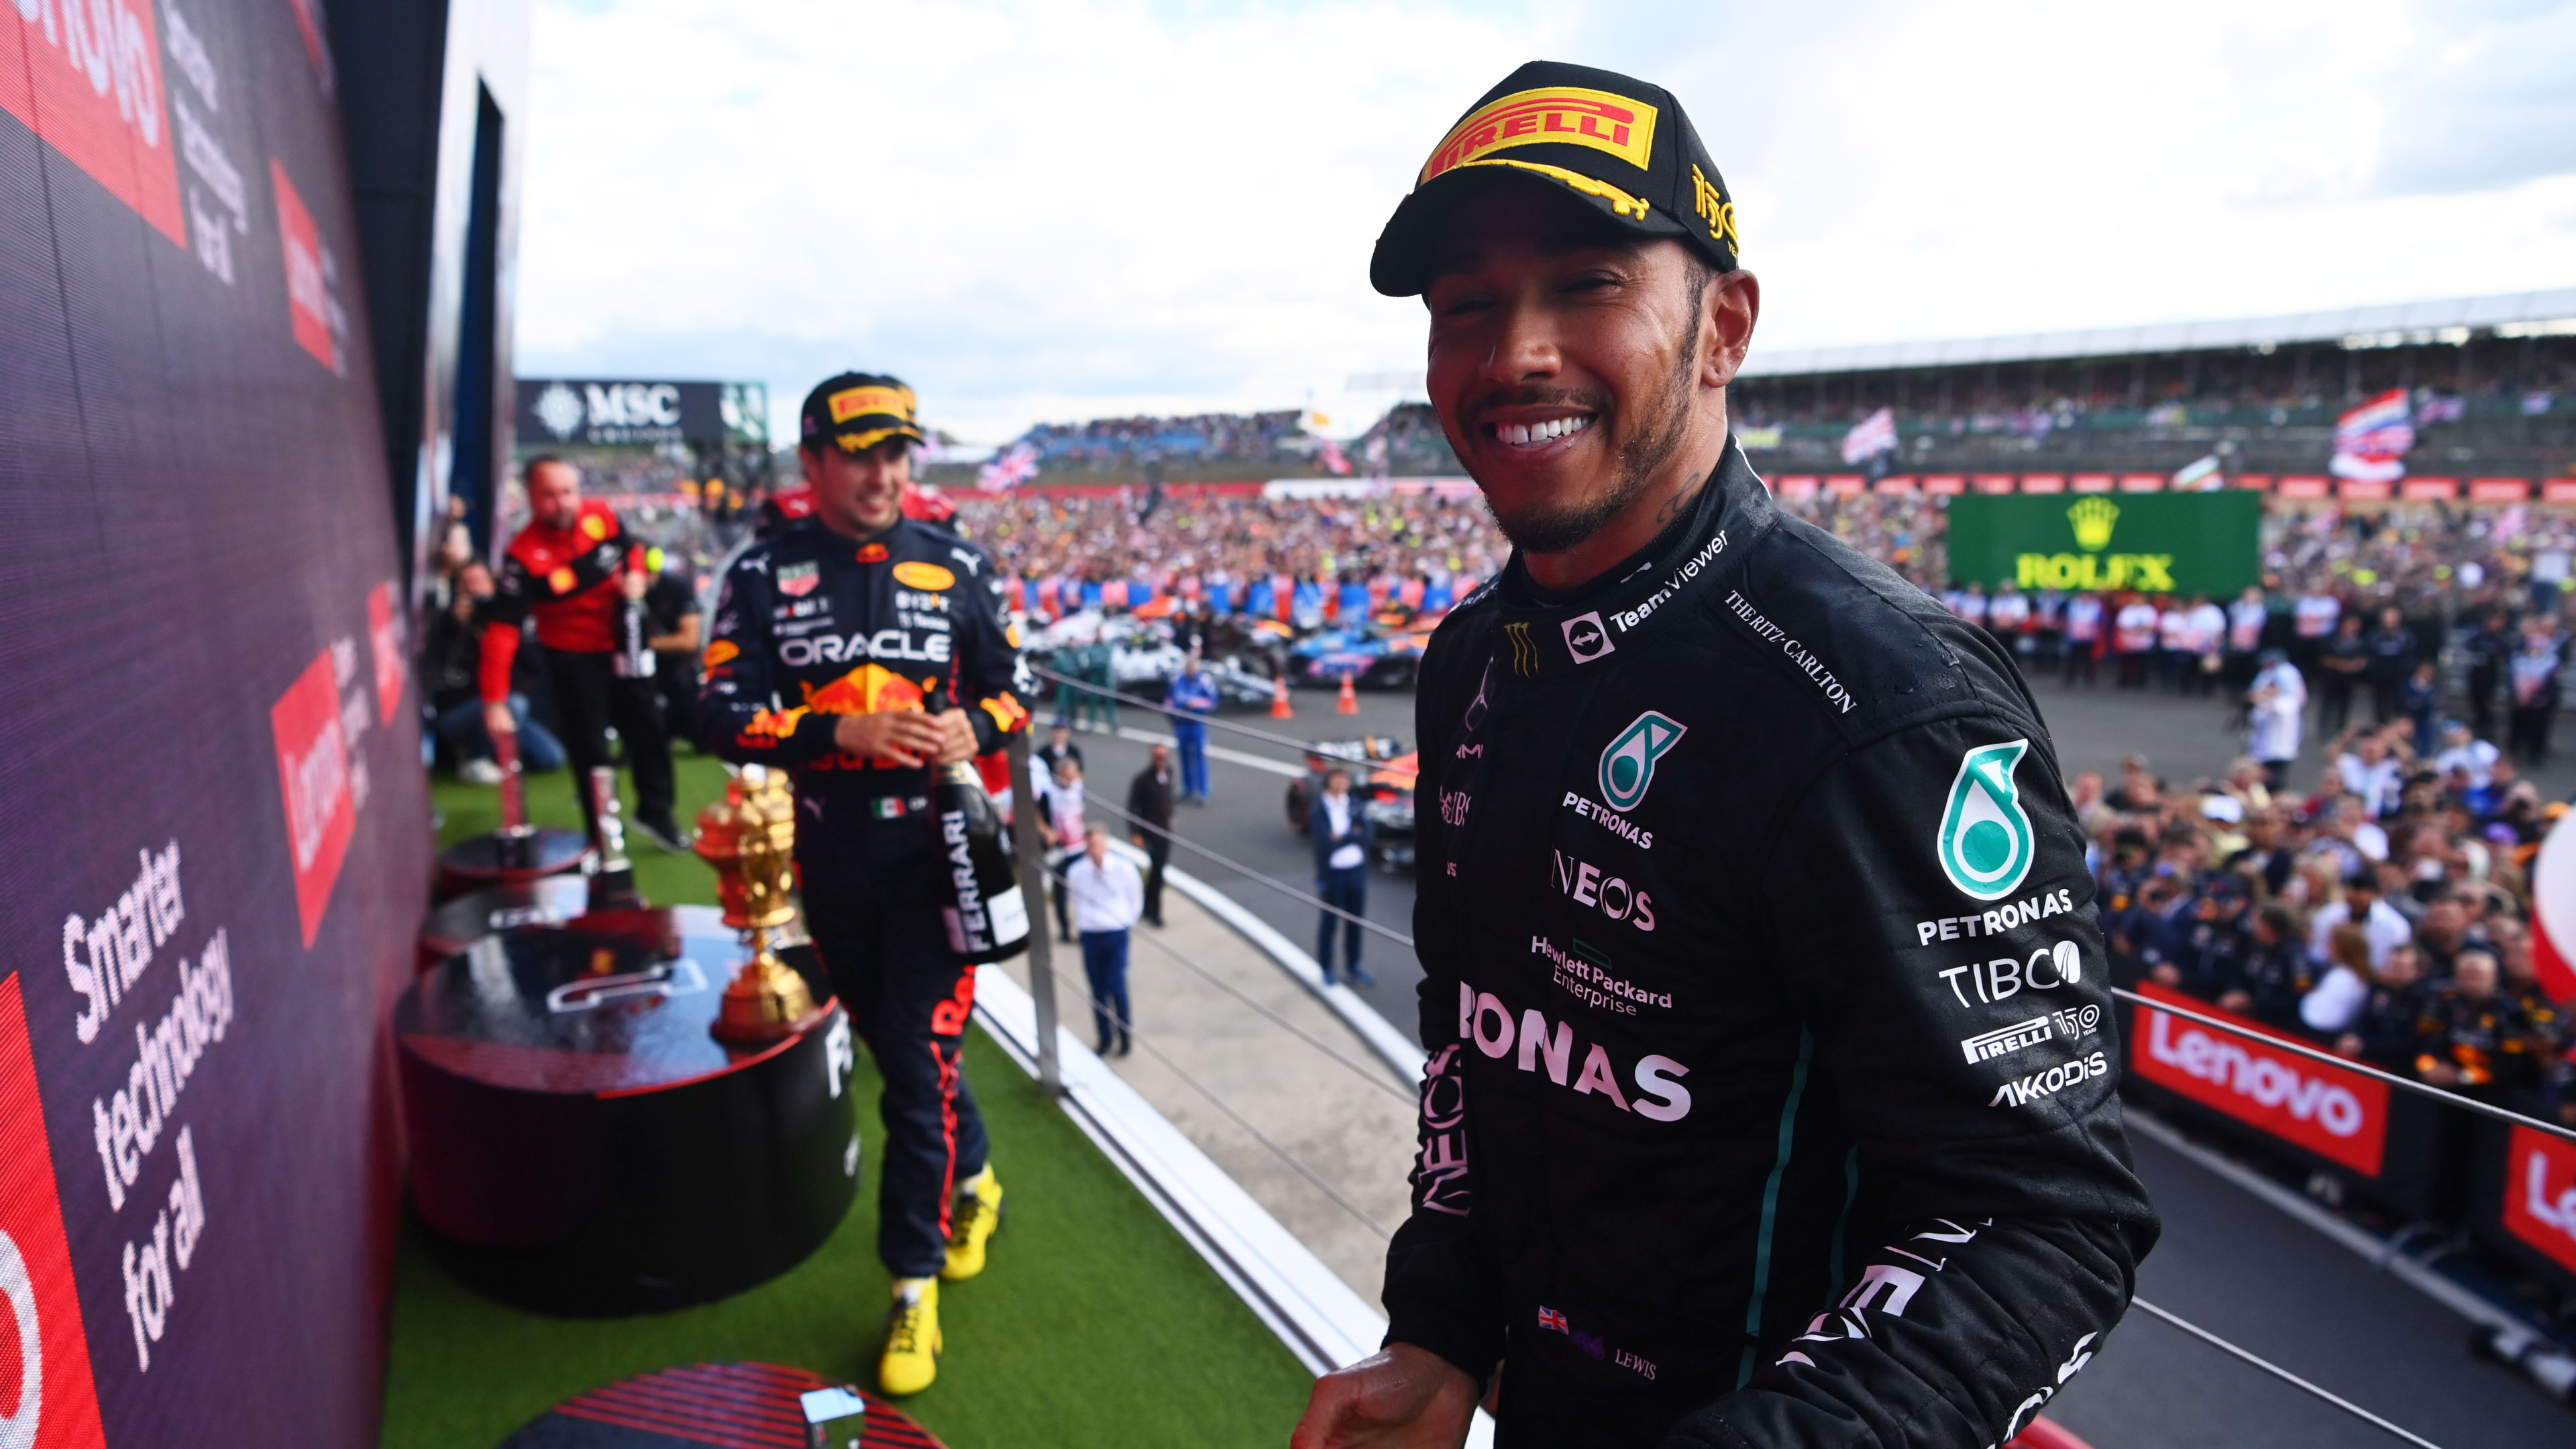 Lewis Hamilton wins his fourth British Grand Prix at Silverstone